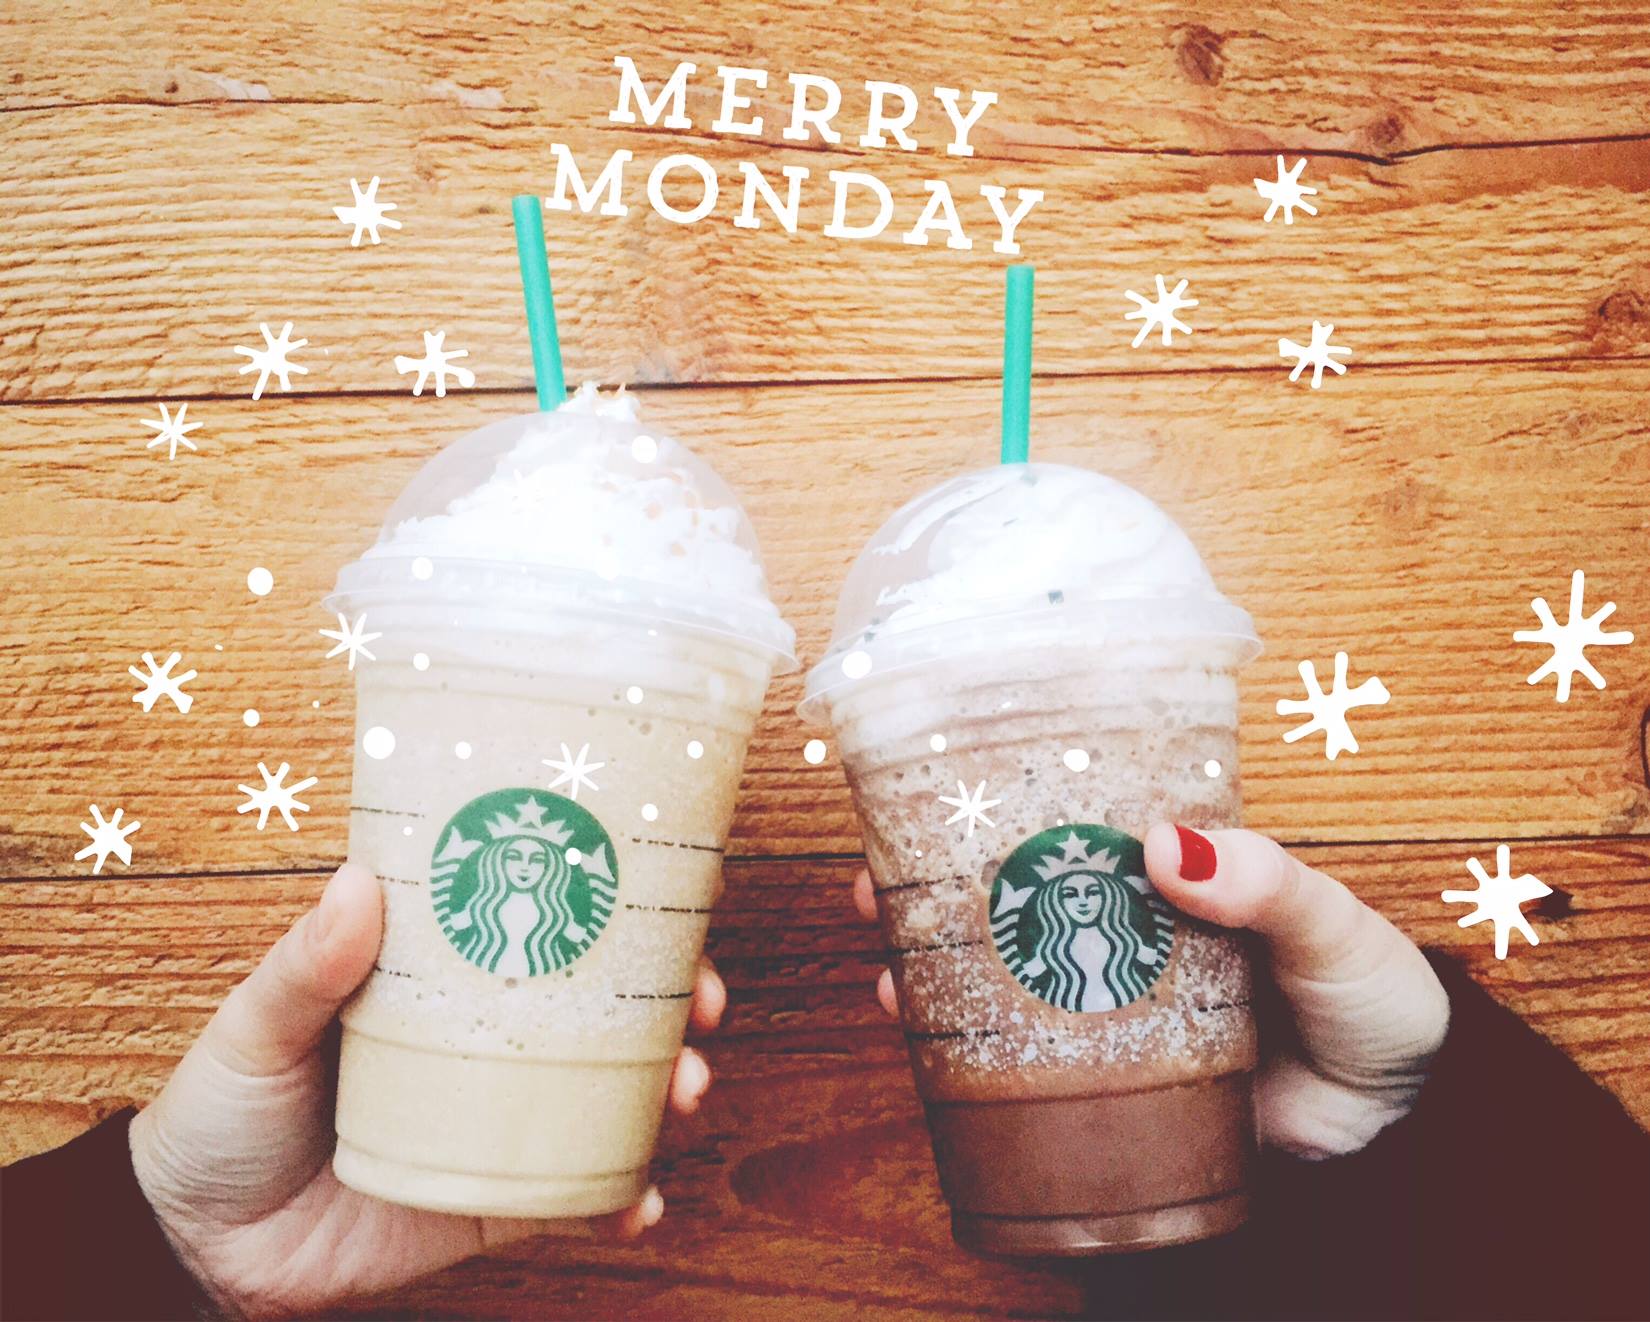 Happy Monday at Starbucks stores.